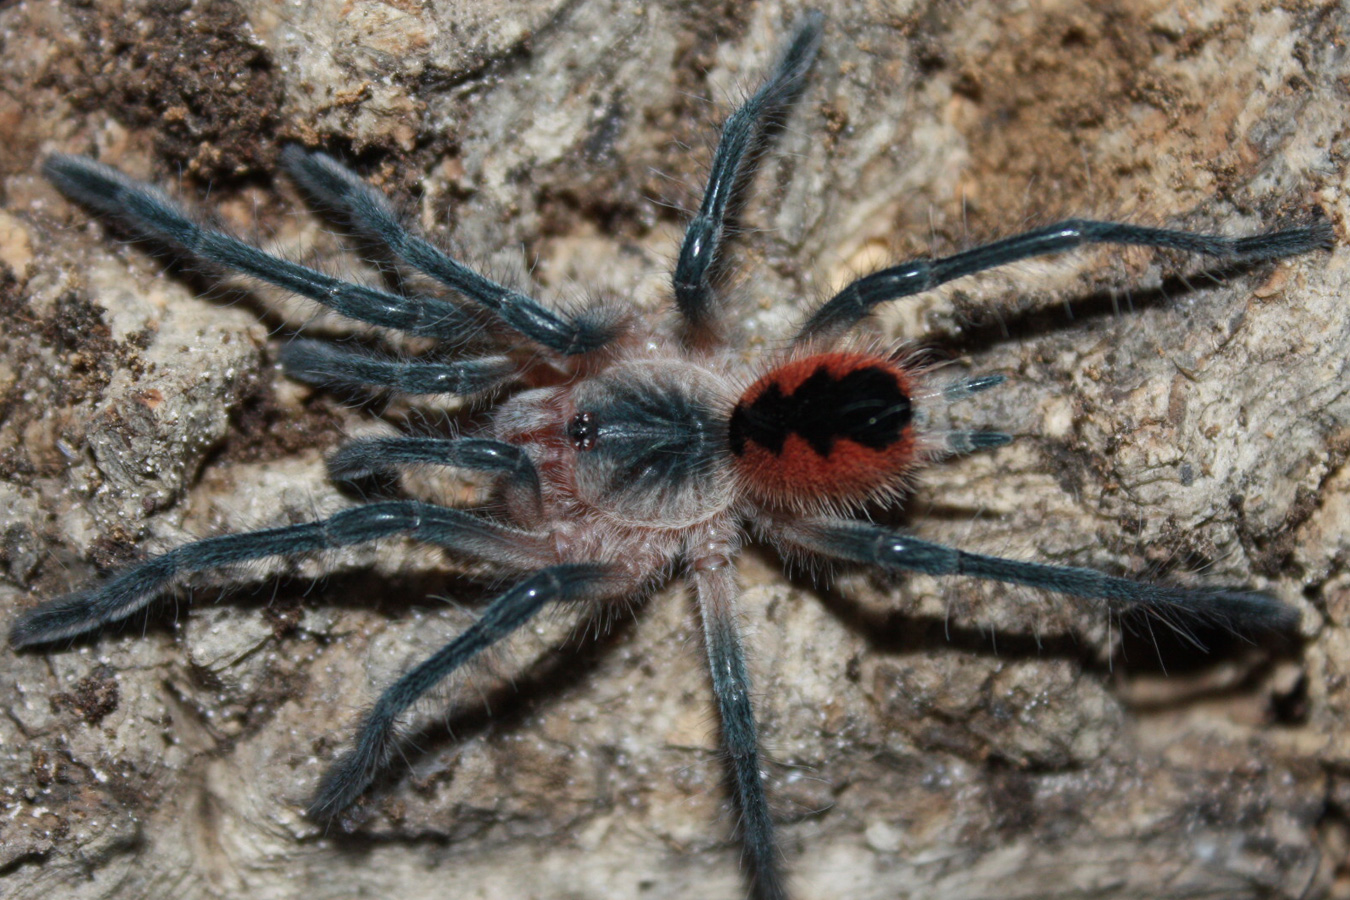 Pamphobeteus sp. “Cascada” 4cm